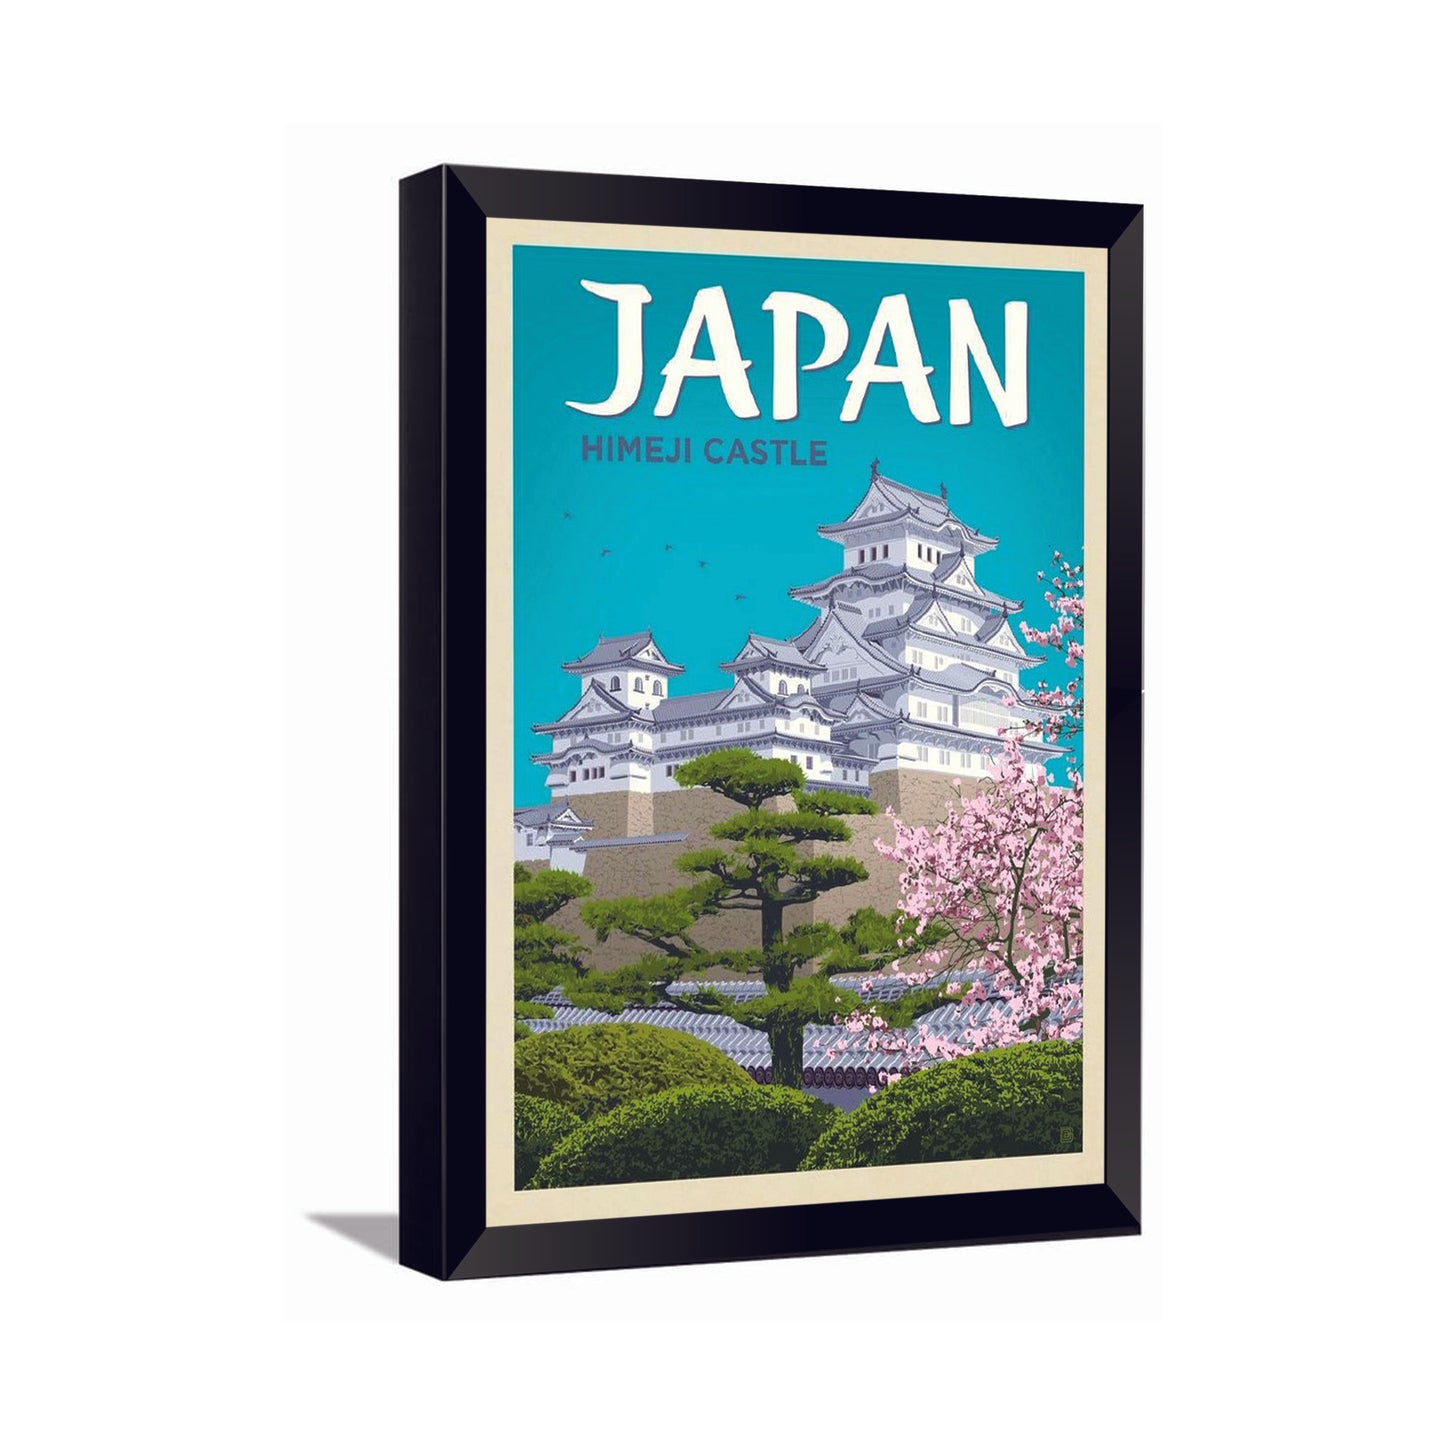 Japan Himeji Castle---